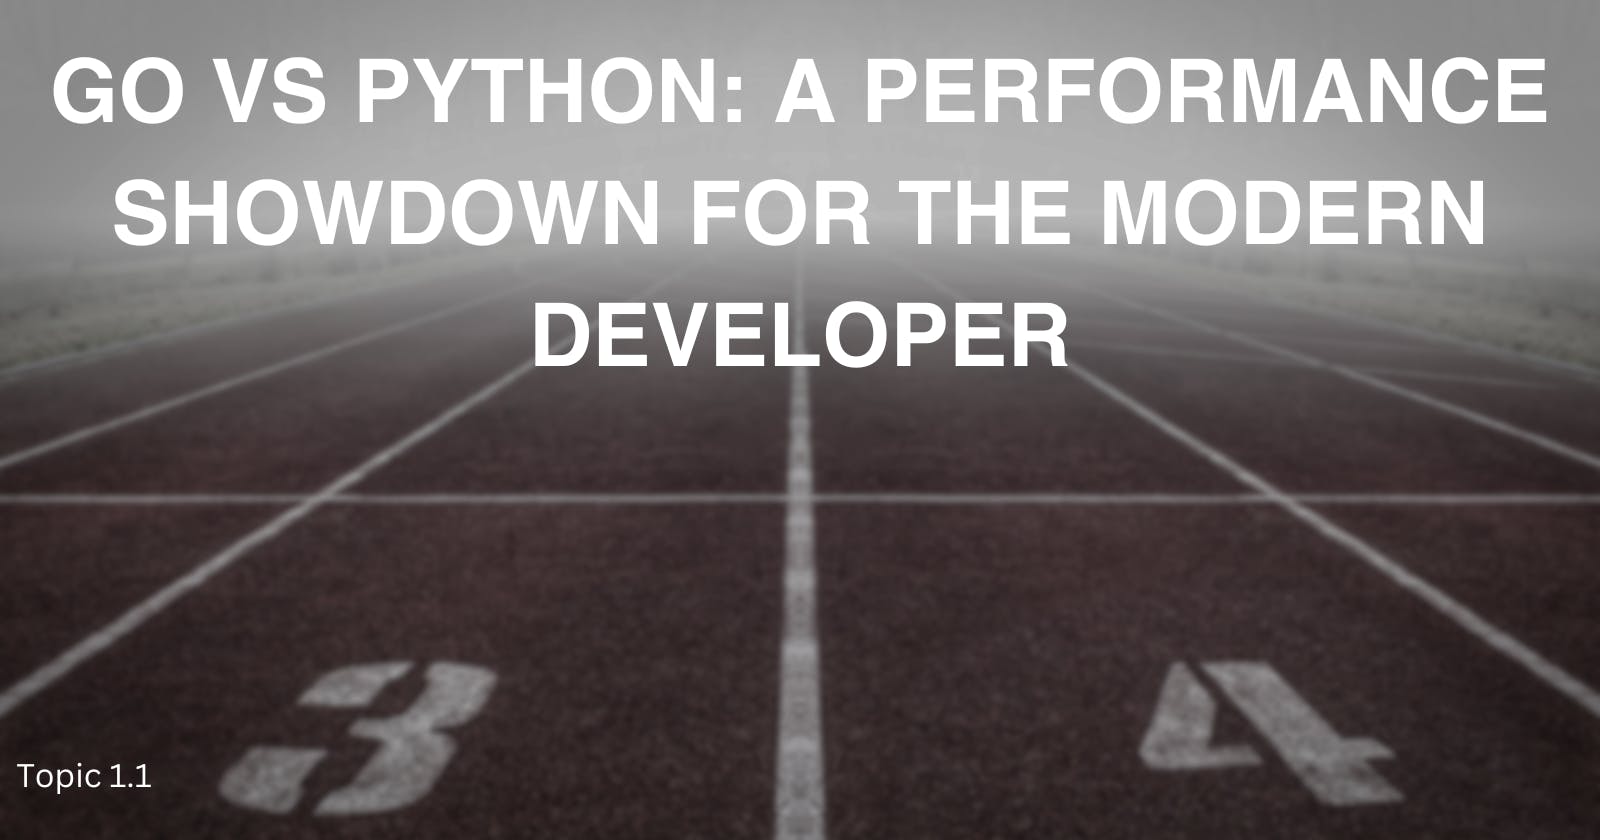 Go vs Python: A Performance Showdown for the Modern Developer